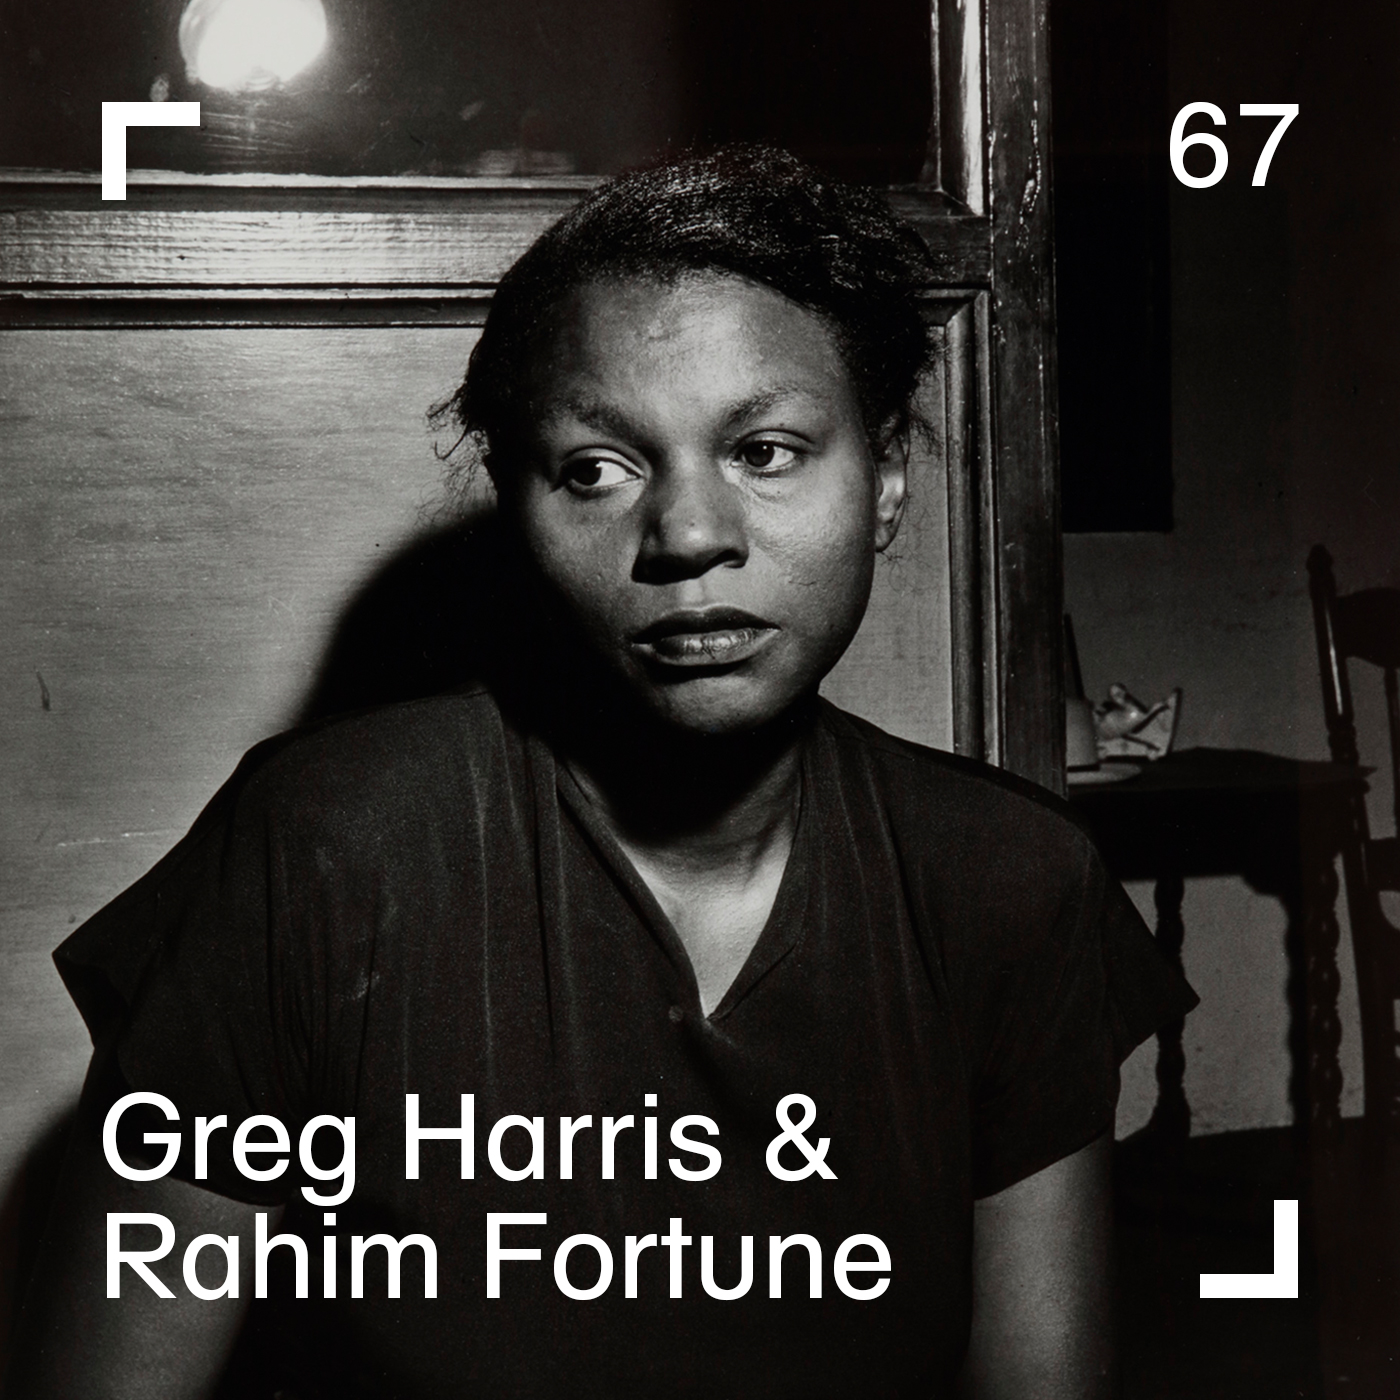 Greg Harris & Rahim Fortune